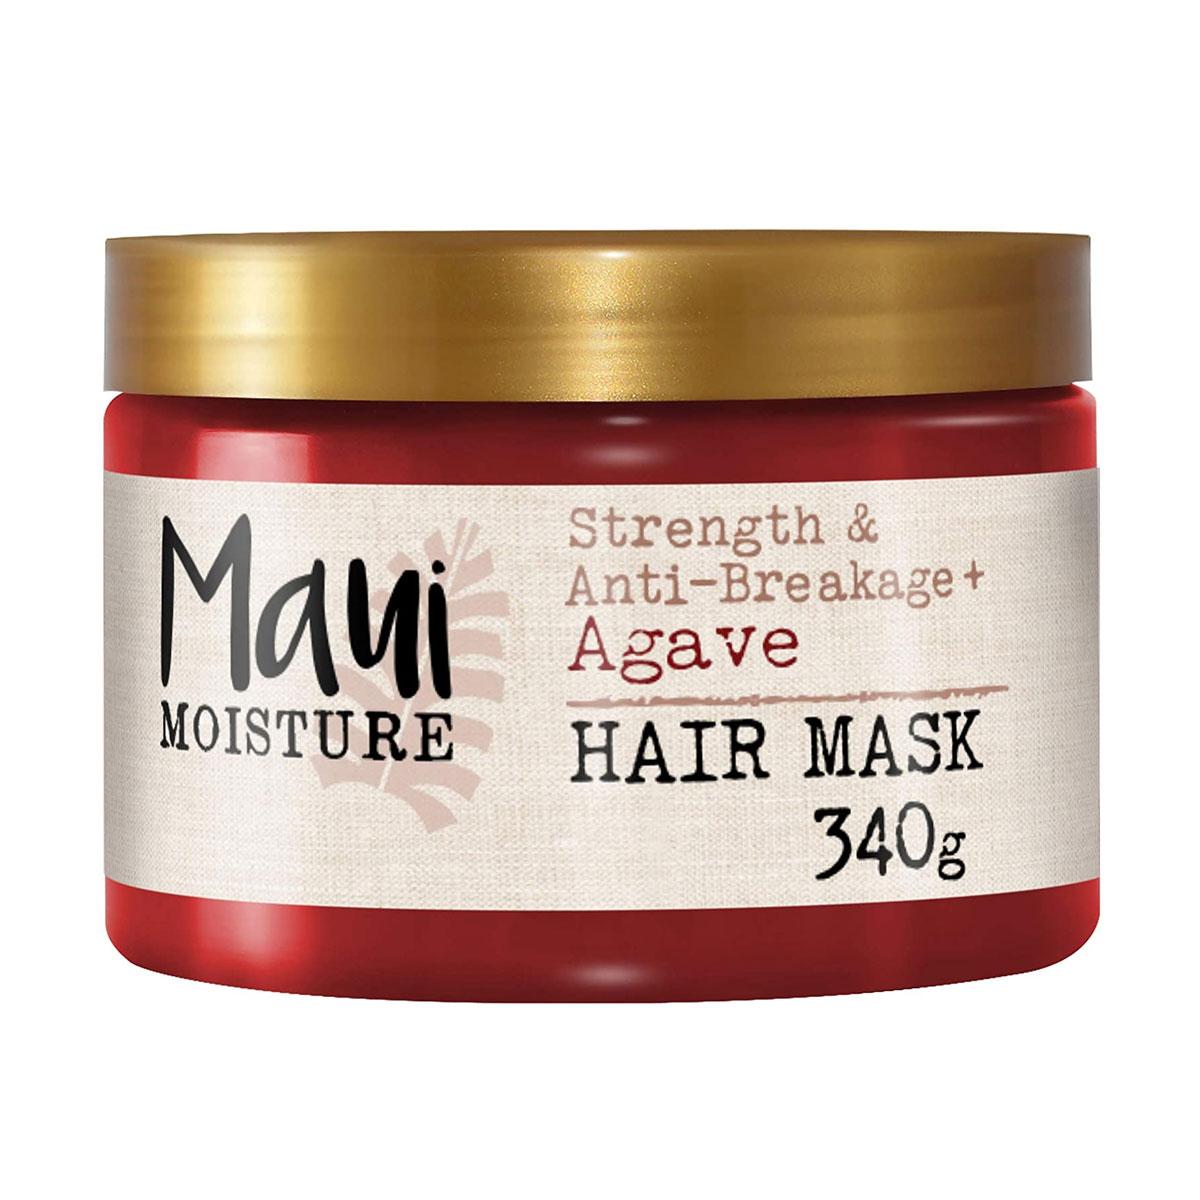 ماسک مو میوه آگاوه  ضد موخوره و ترمیم کننده مو - Moisture Agave Nectar Hair Mask